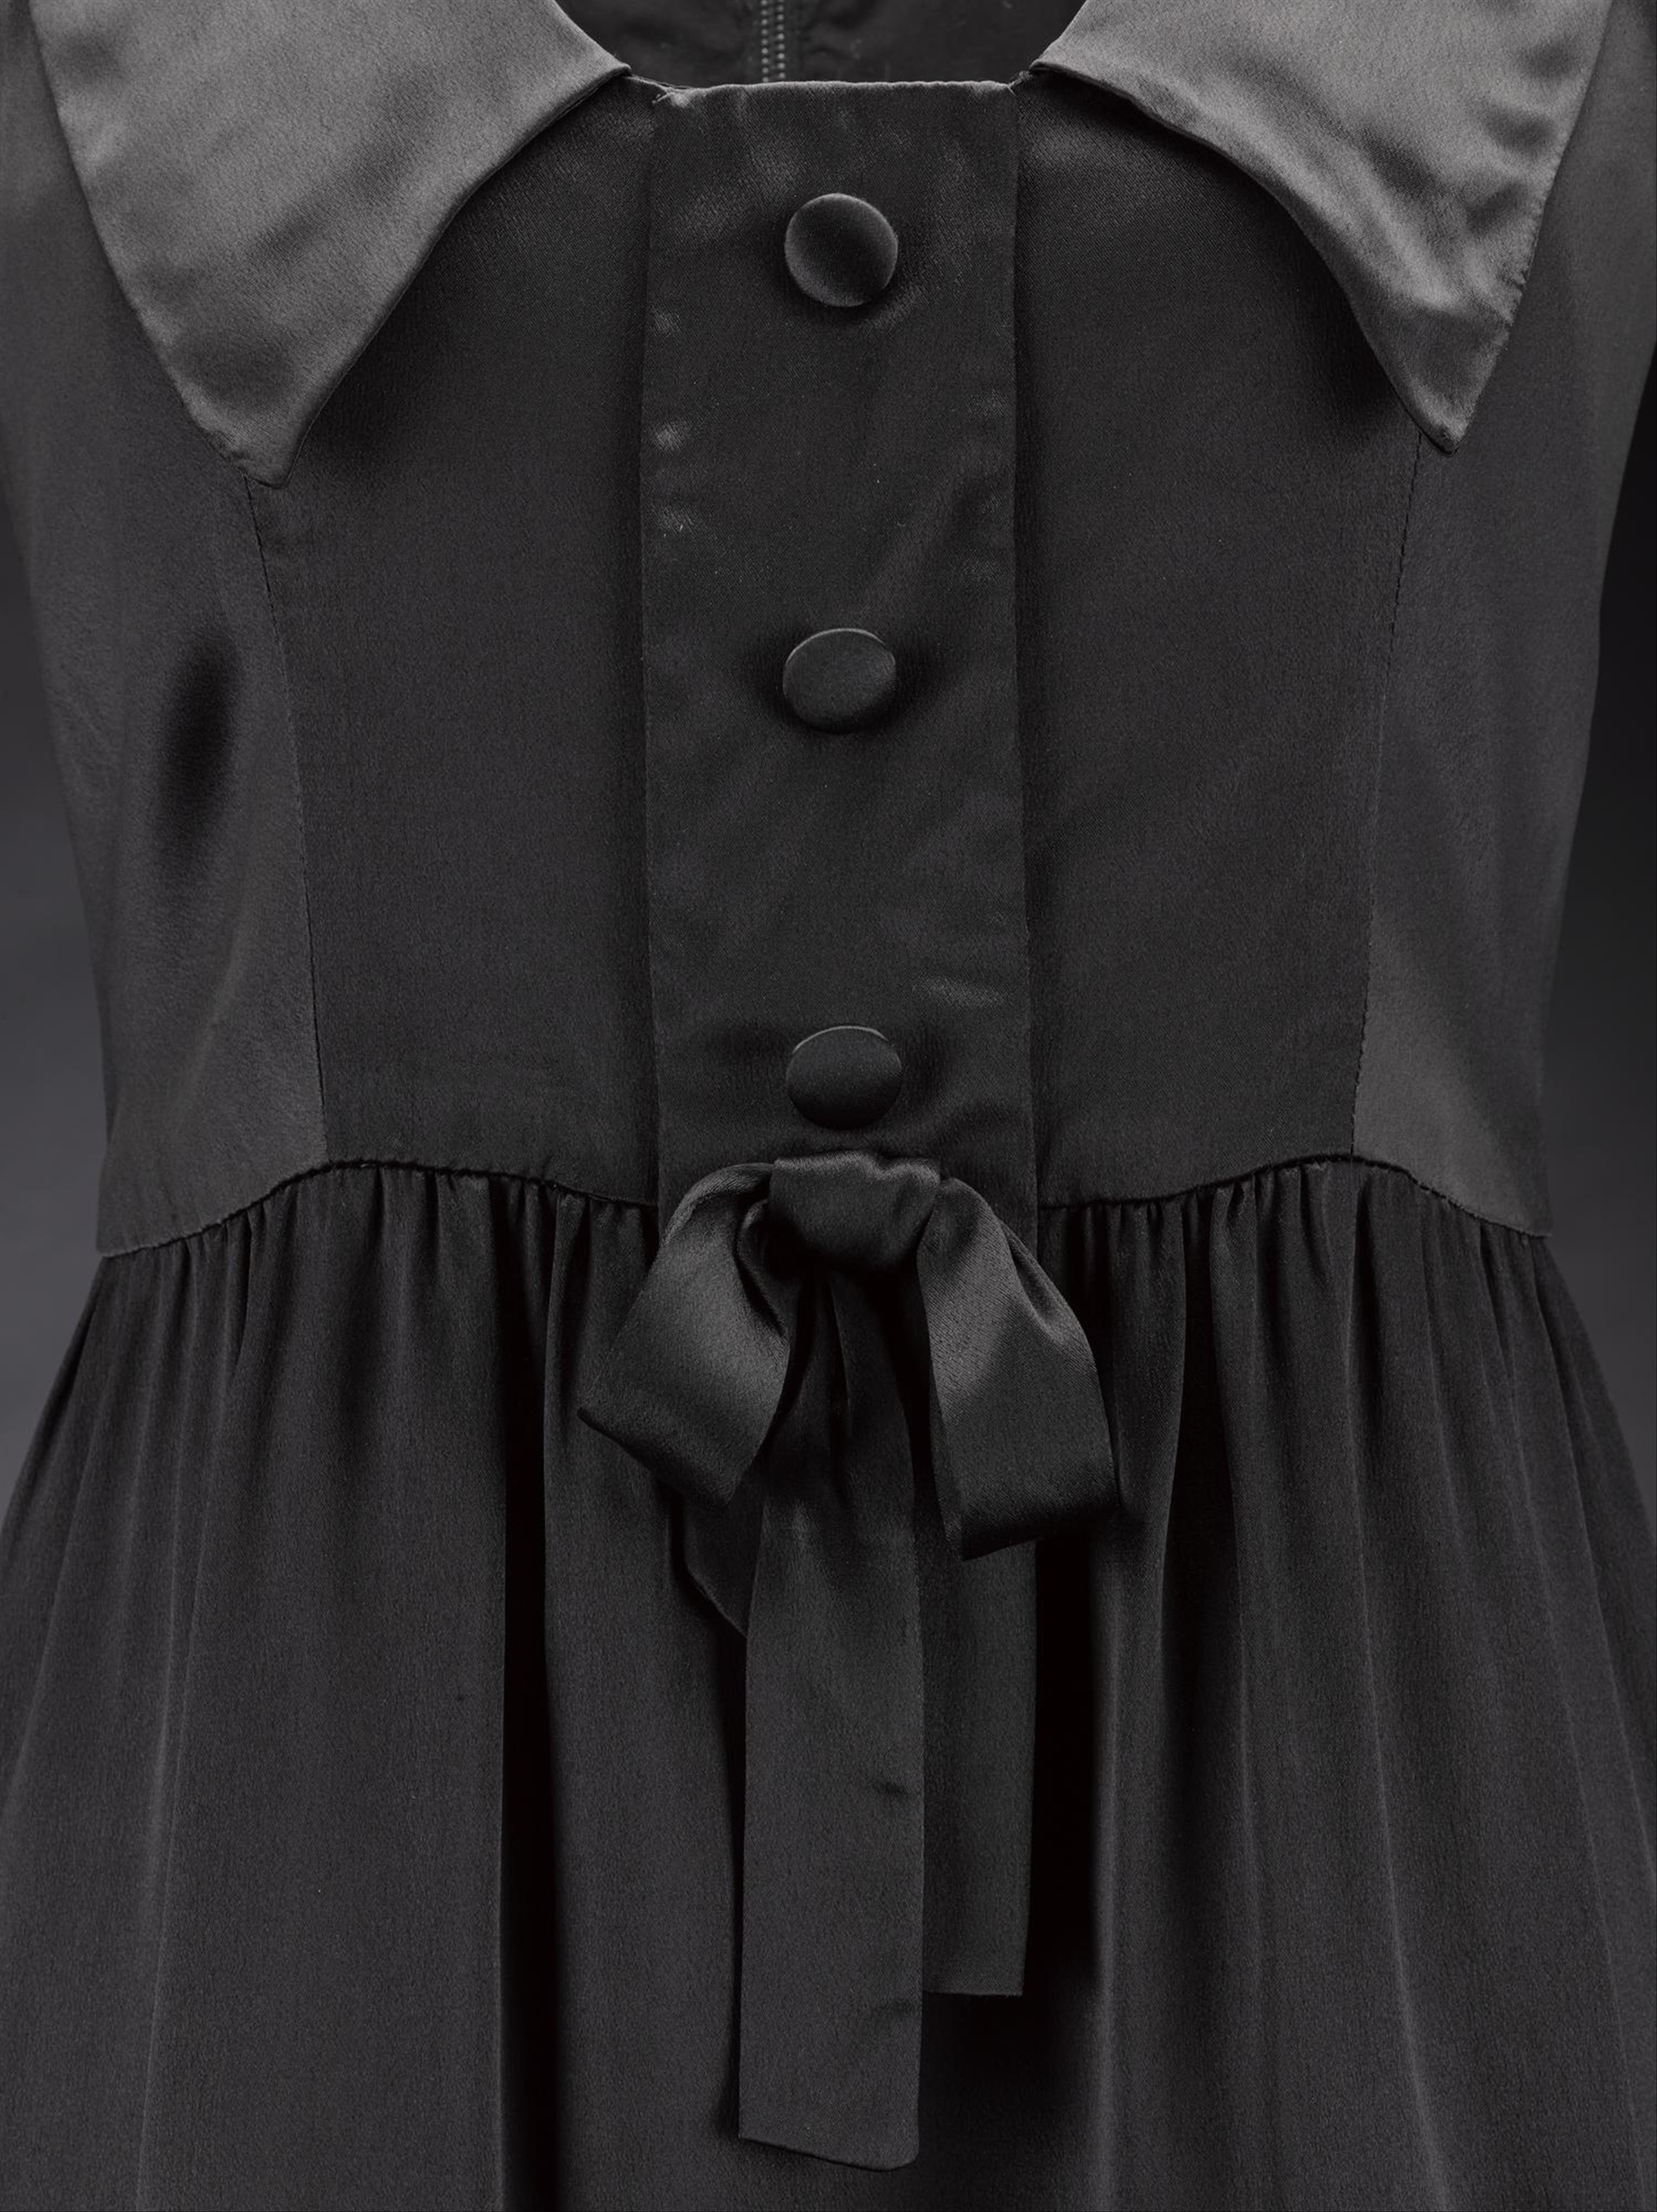 Black satin mini dress, c.1964.